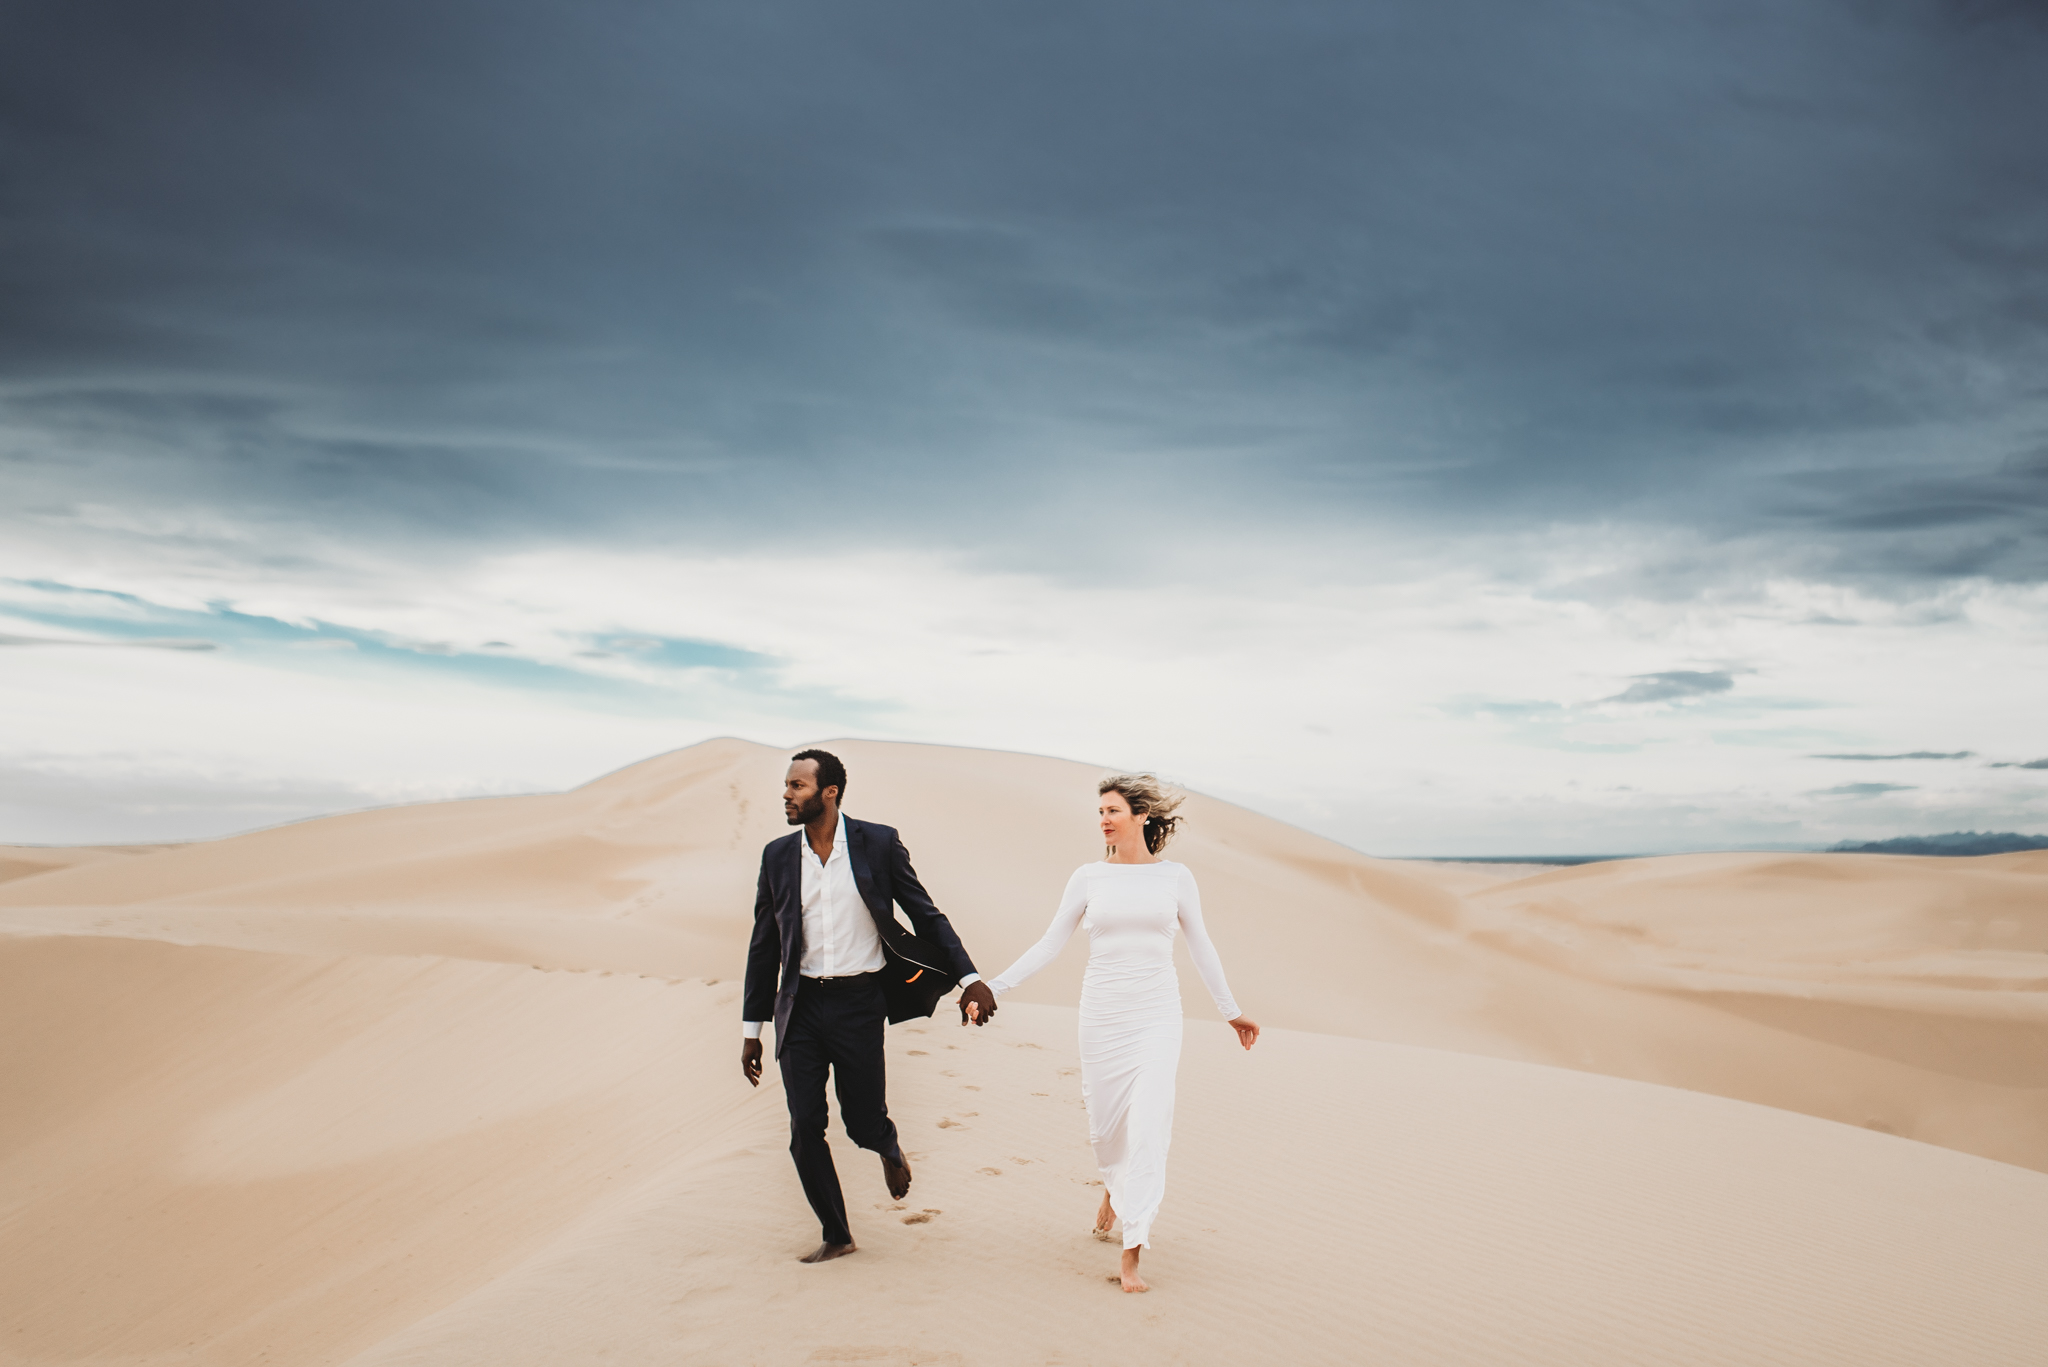 wedding couple running across sand dunes under stormy sky